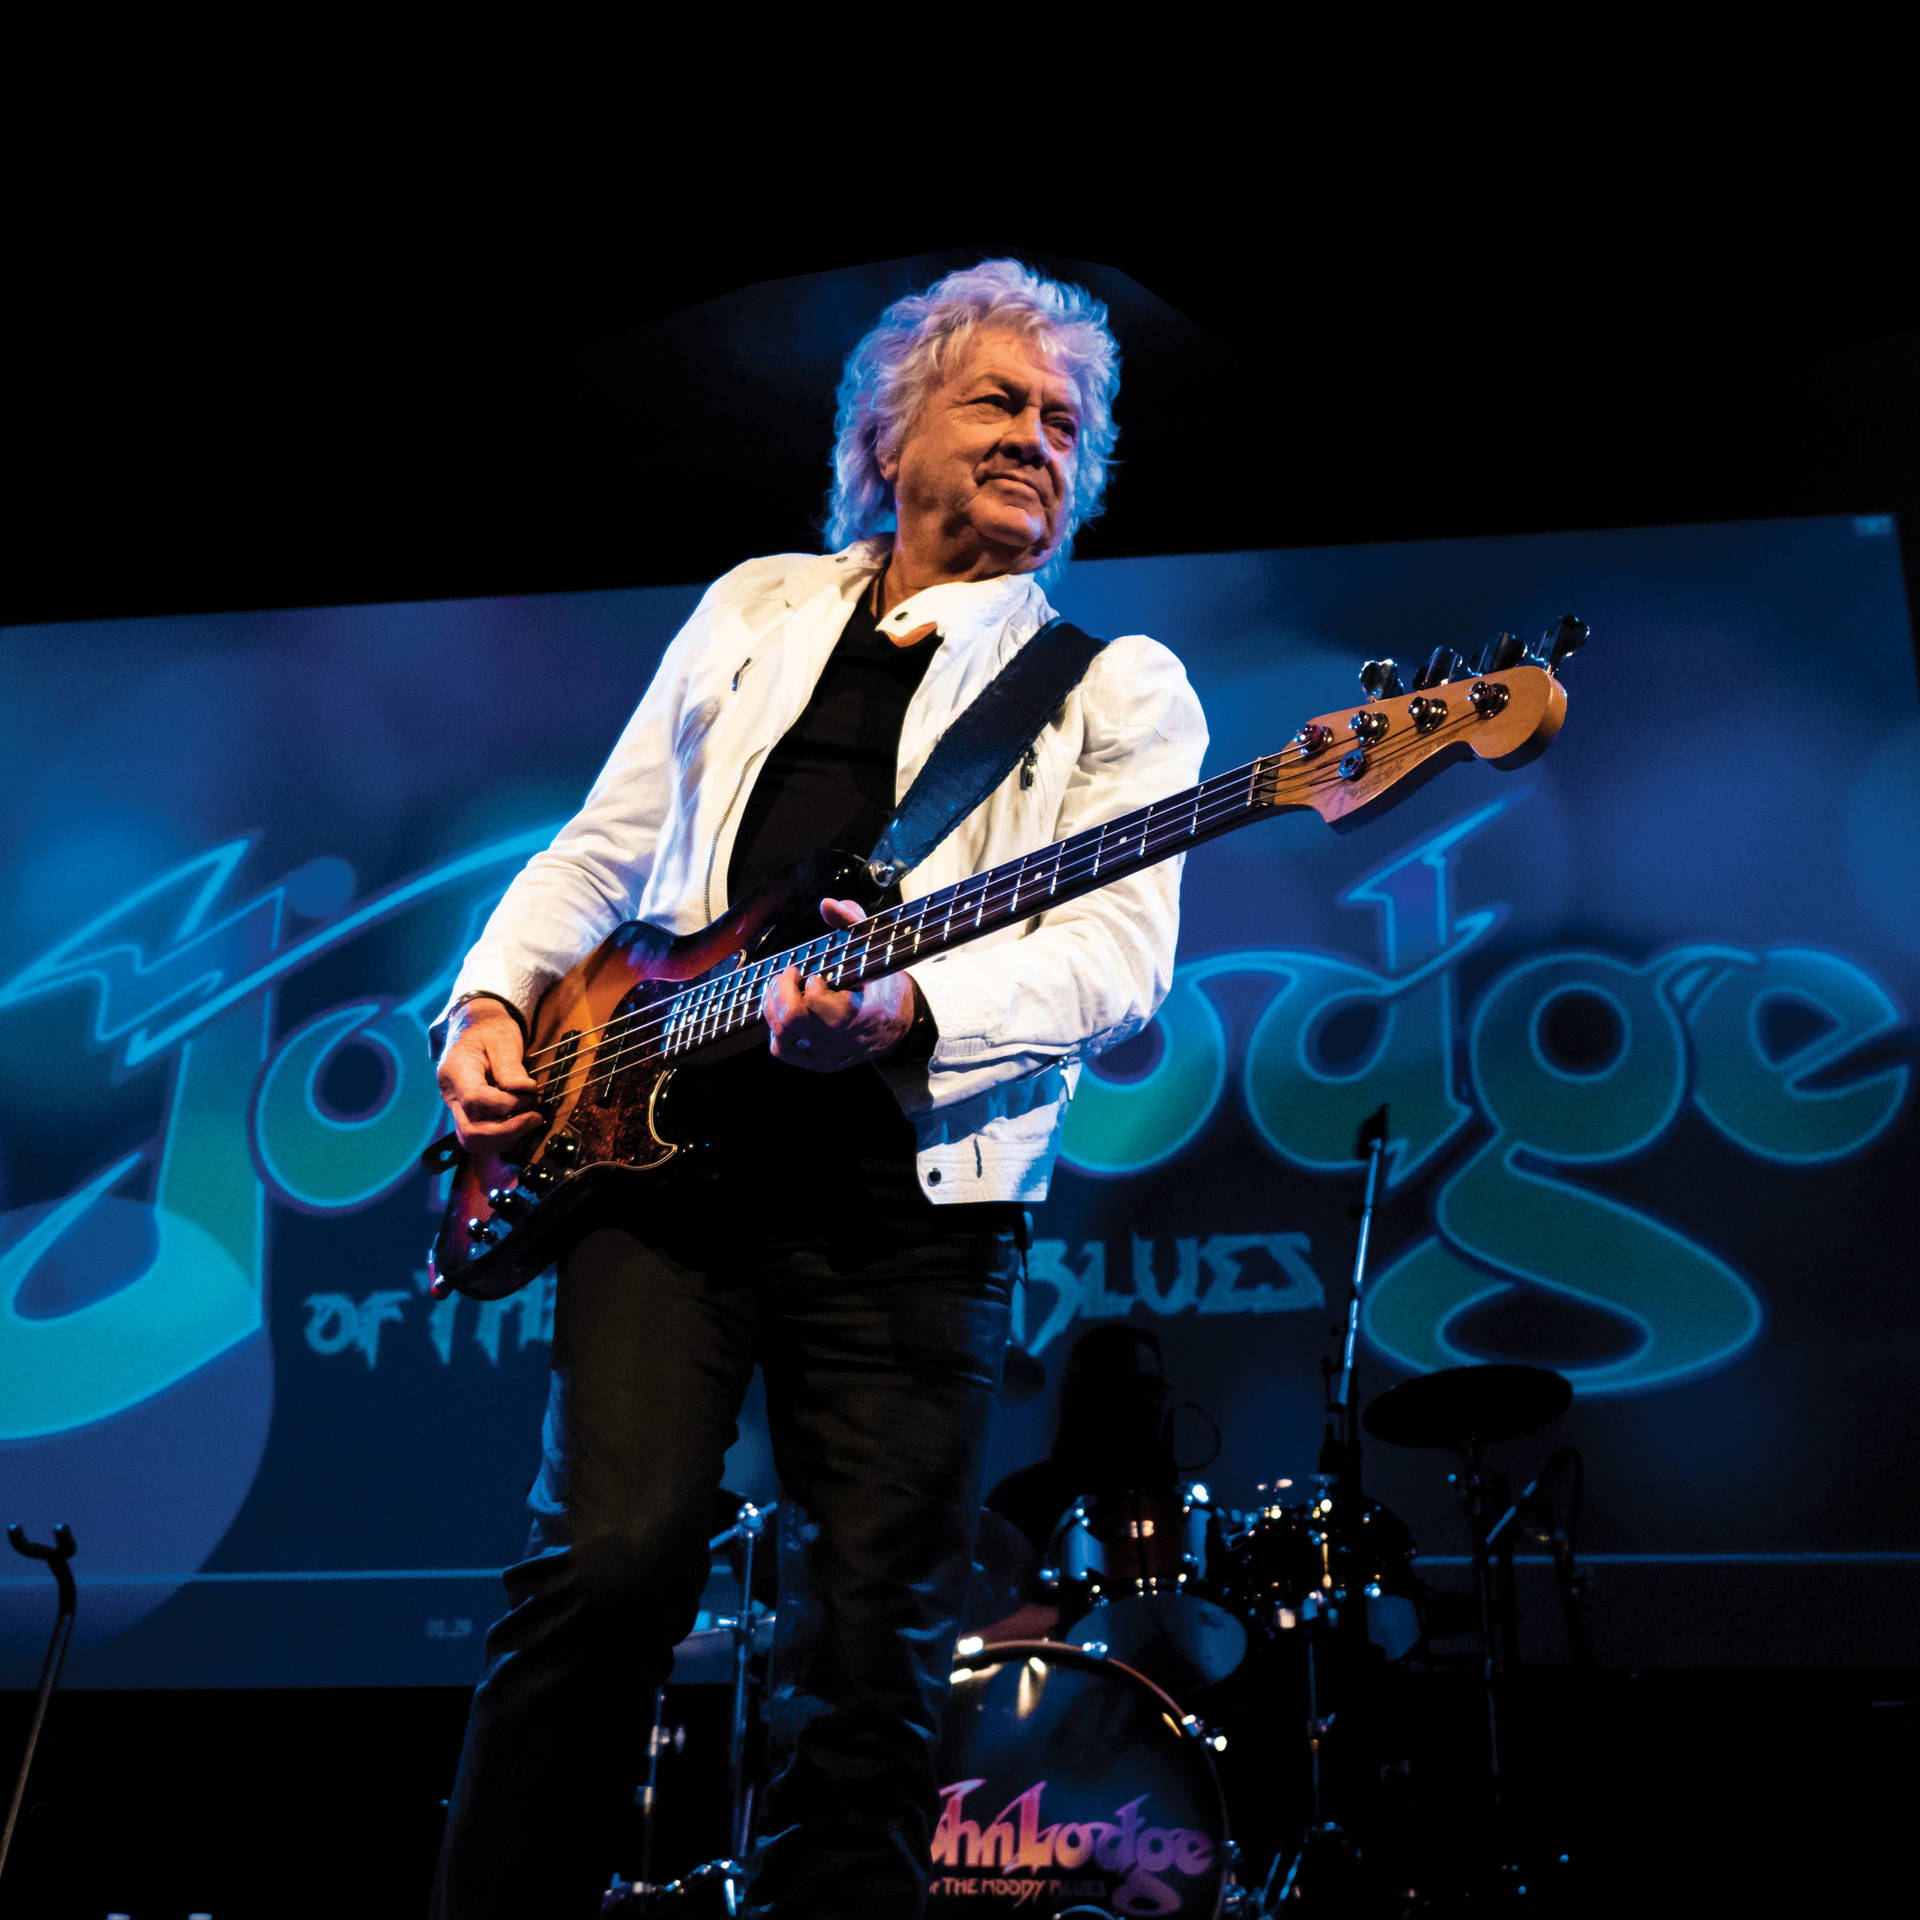 Dergitarrist Von The Moody Blues Band, John Lodge. Wallpaper